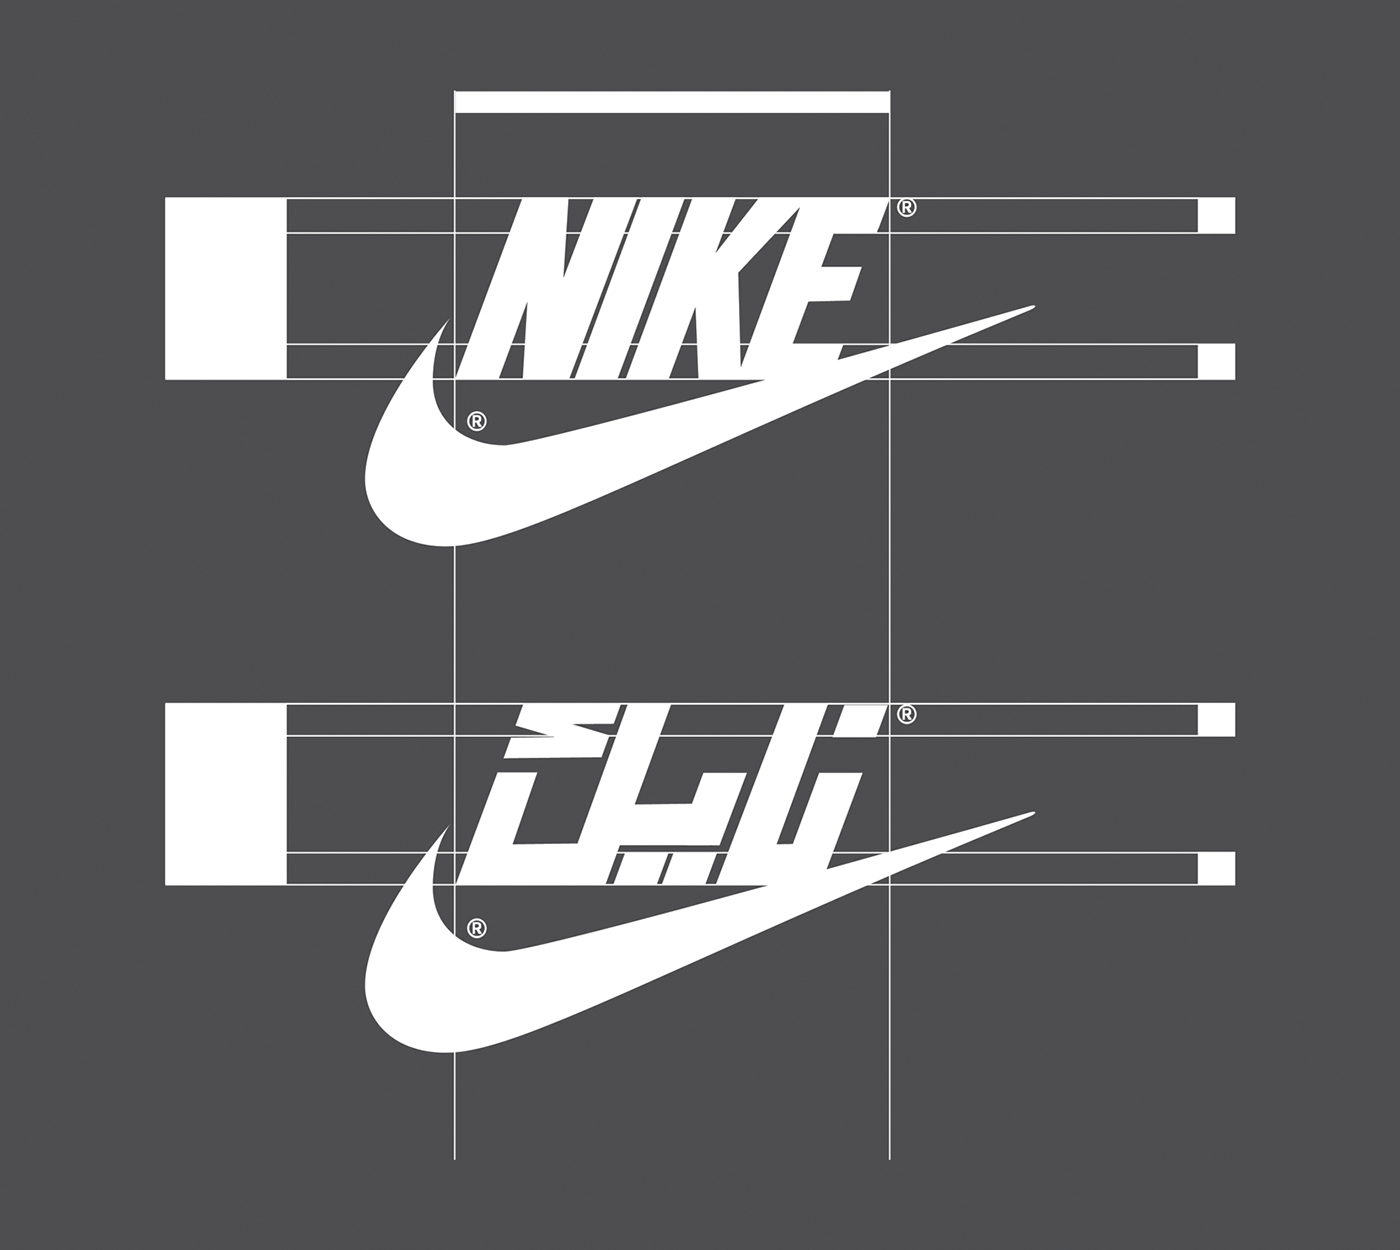 Nike  ADIDAS  sony vaio  quik silver  intel logo logo in arabic brands English to araibc gray creative